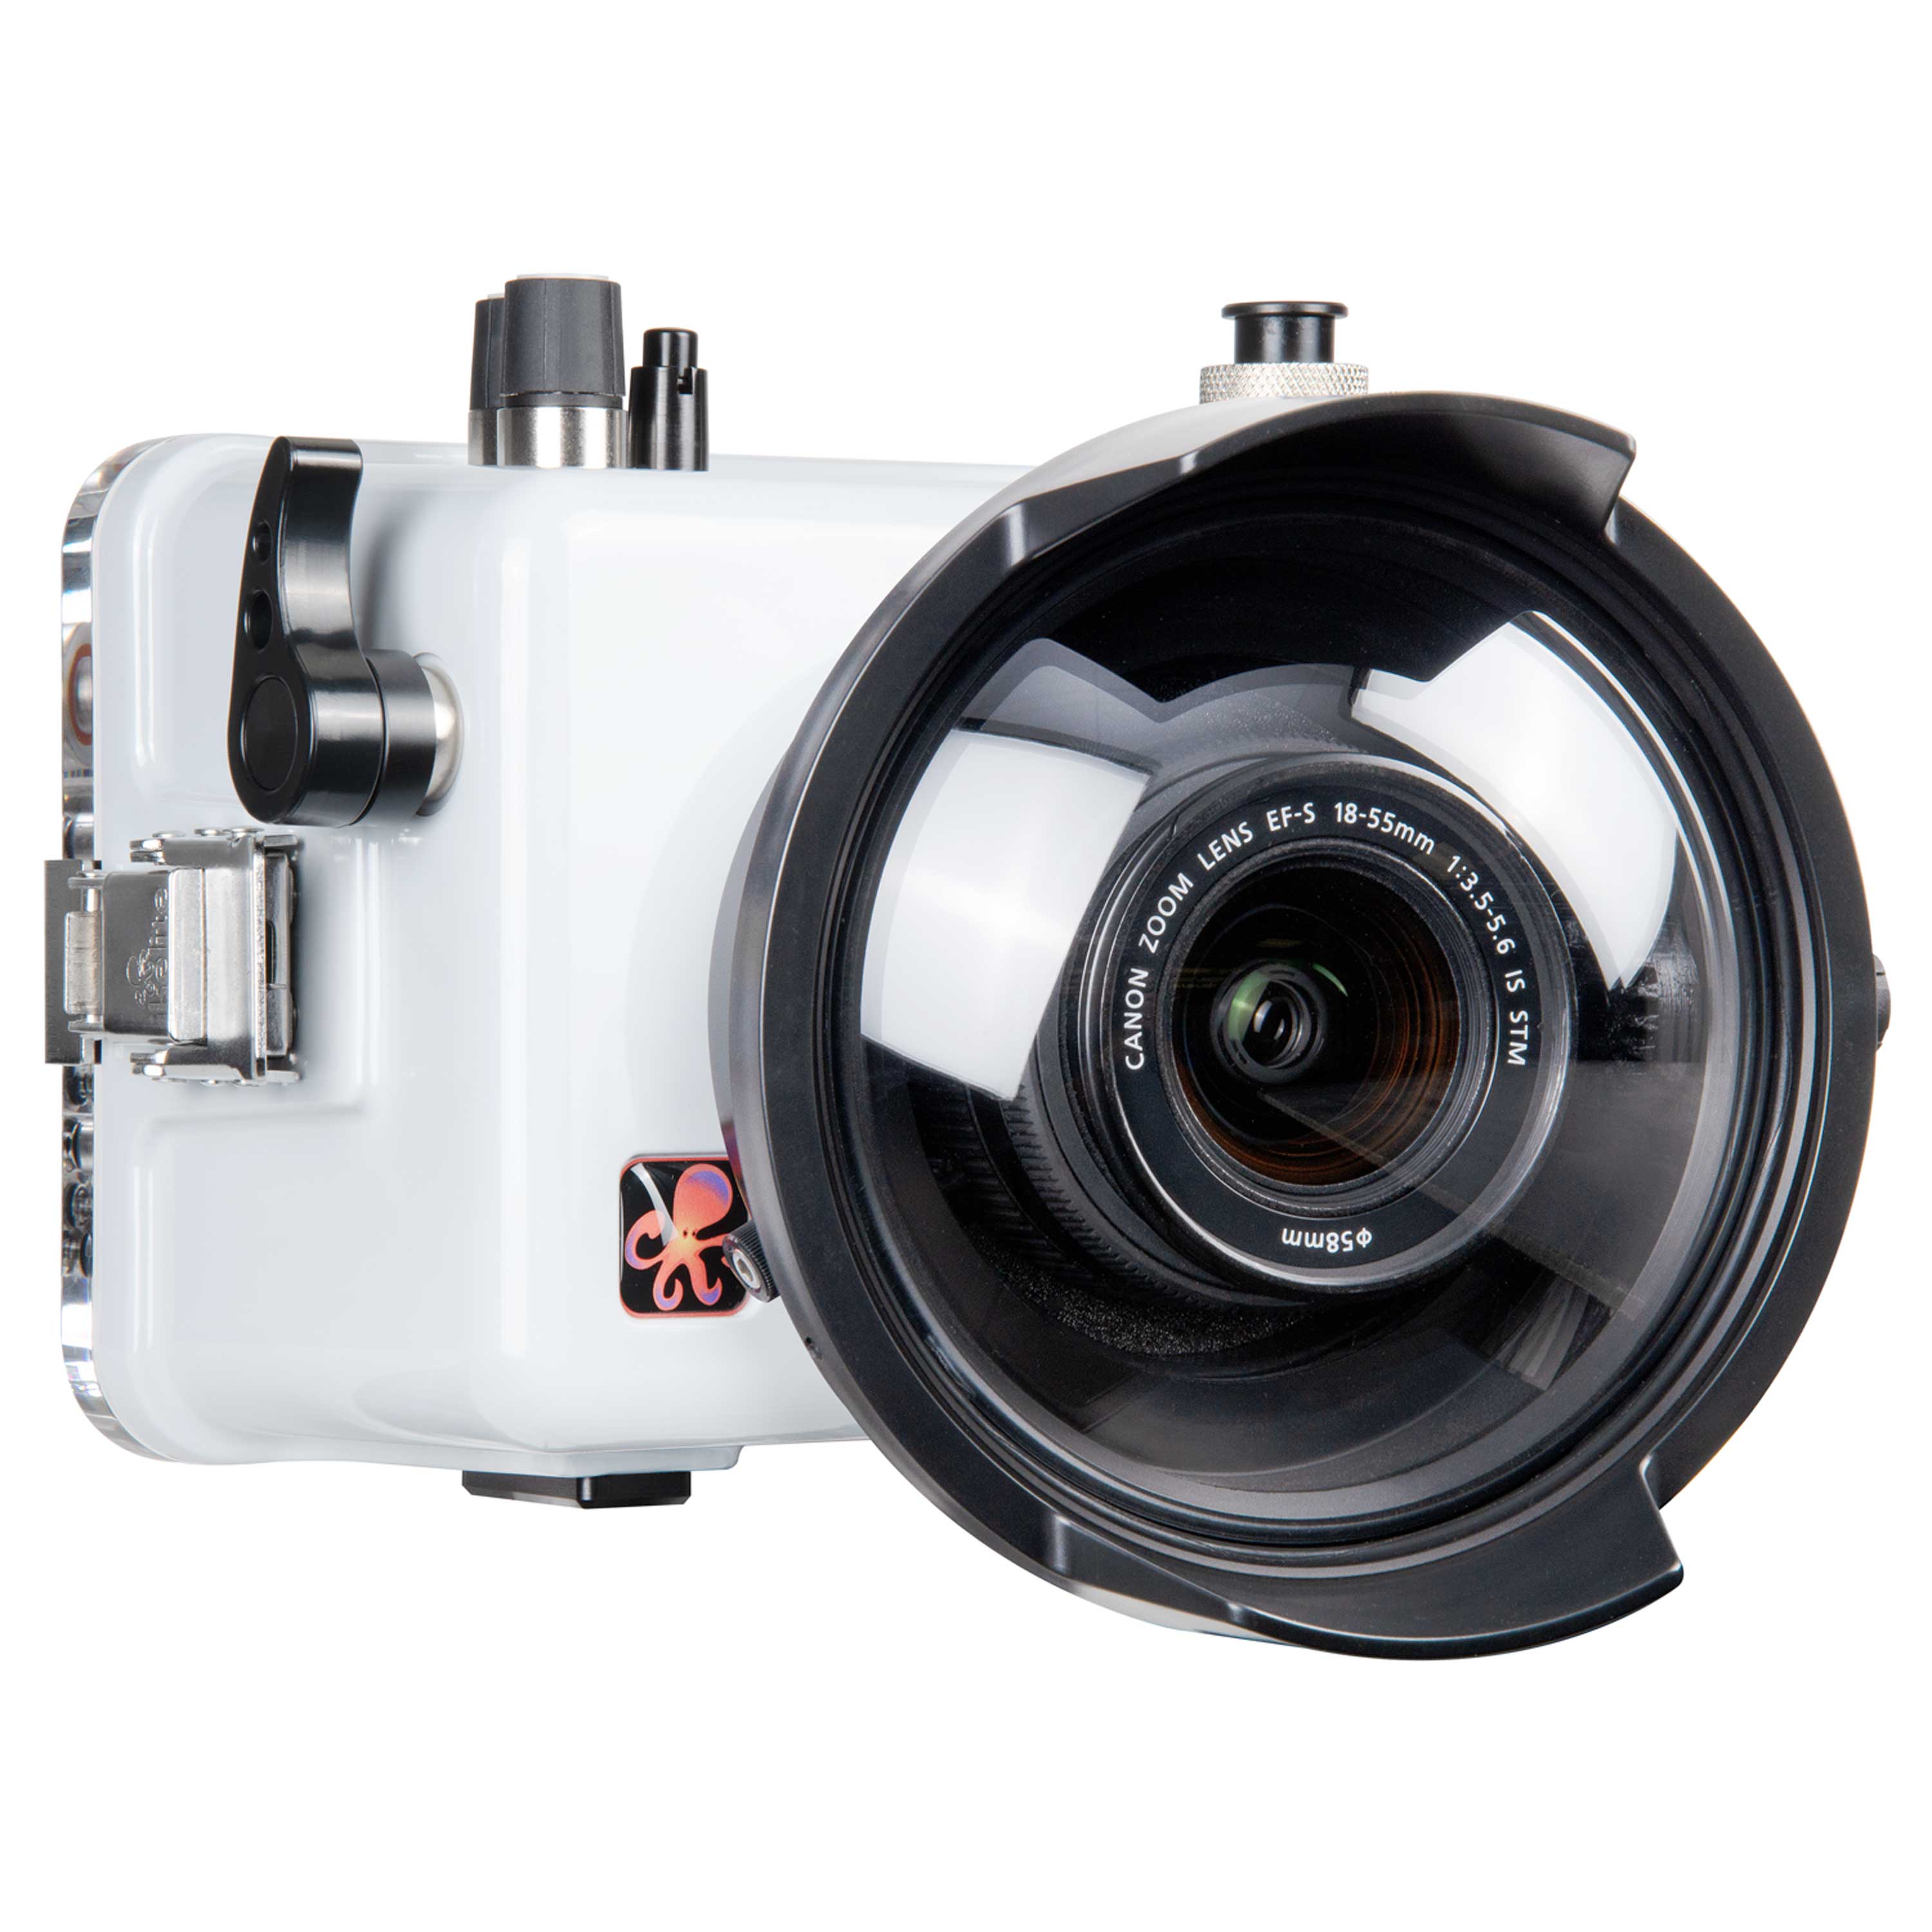 200DLM/C Underwater TTL Housing for Canon EOS 100D Rebel SL1 DSLR Cameras